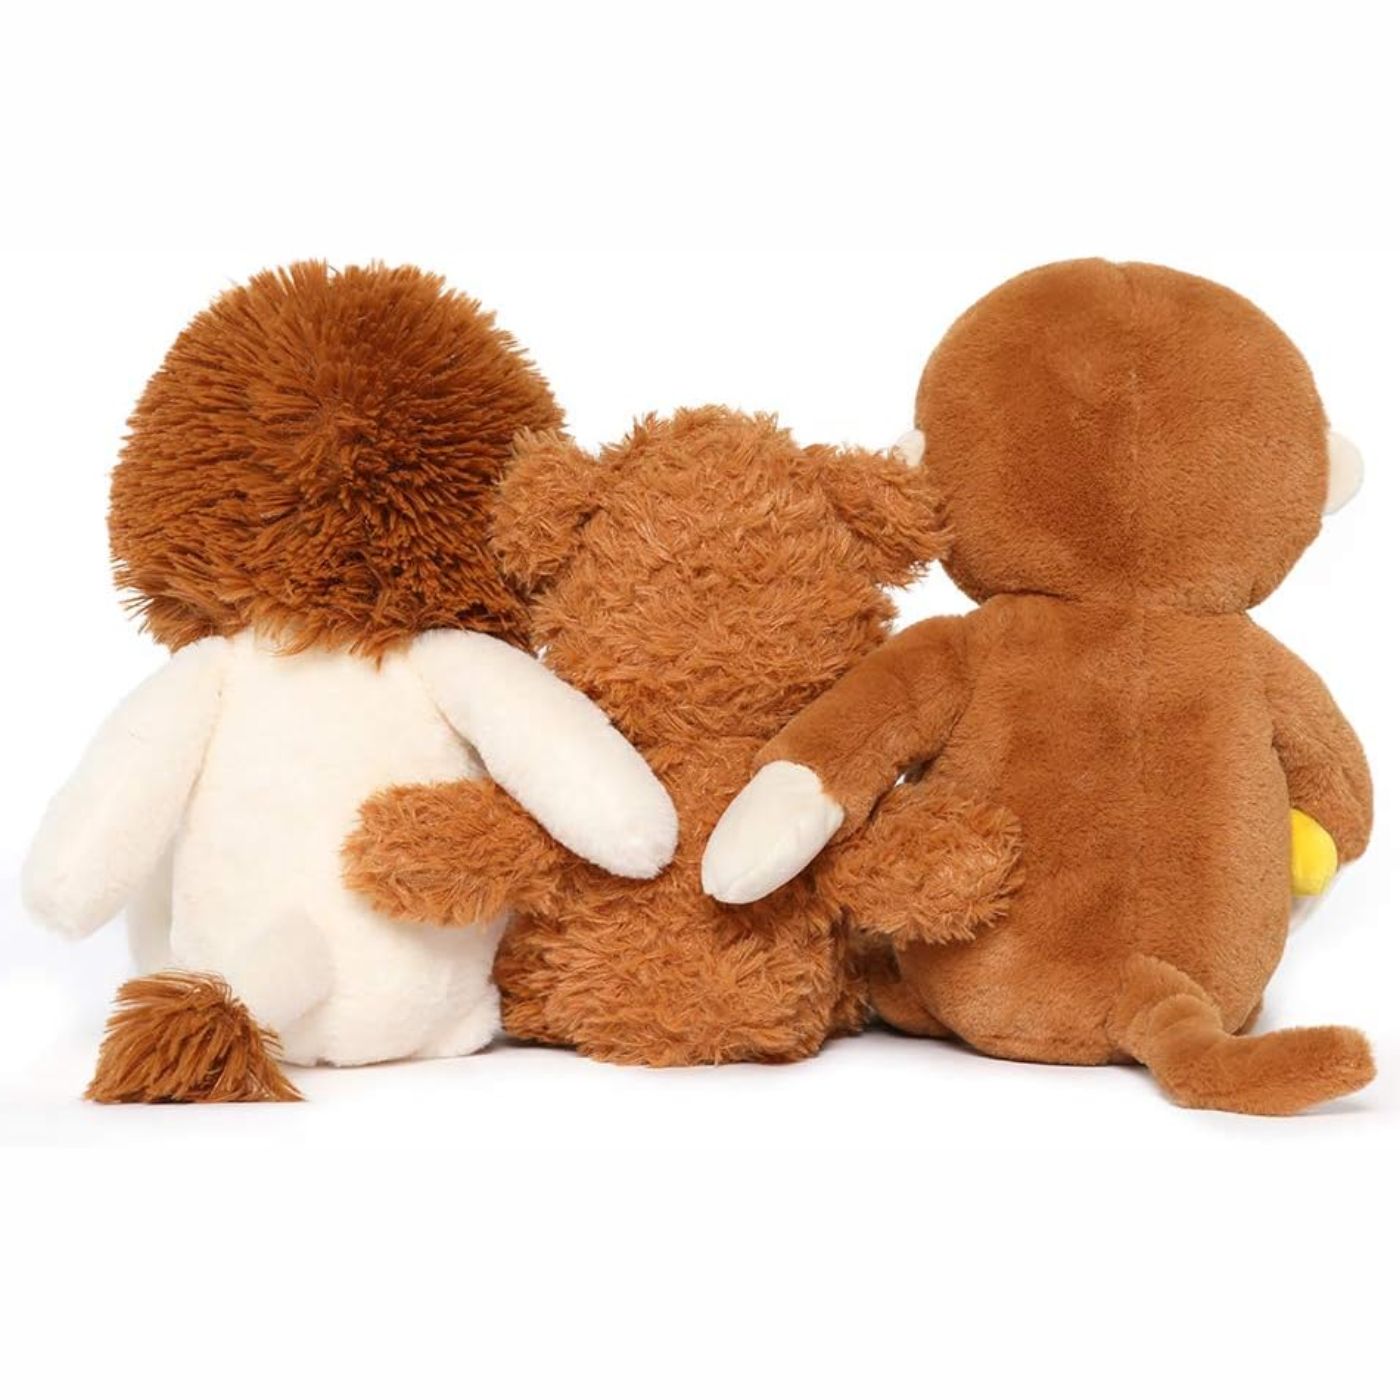 3 Pcs Stuffed Animal Plush Toys, 15.7 Inches